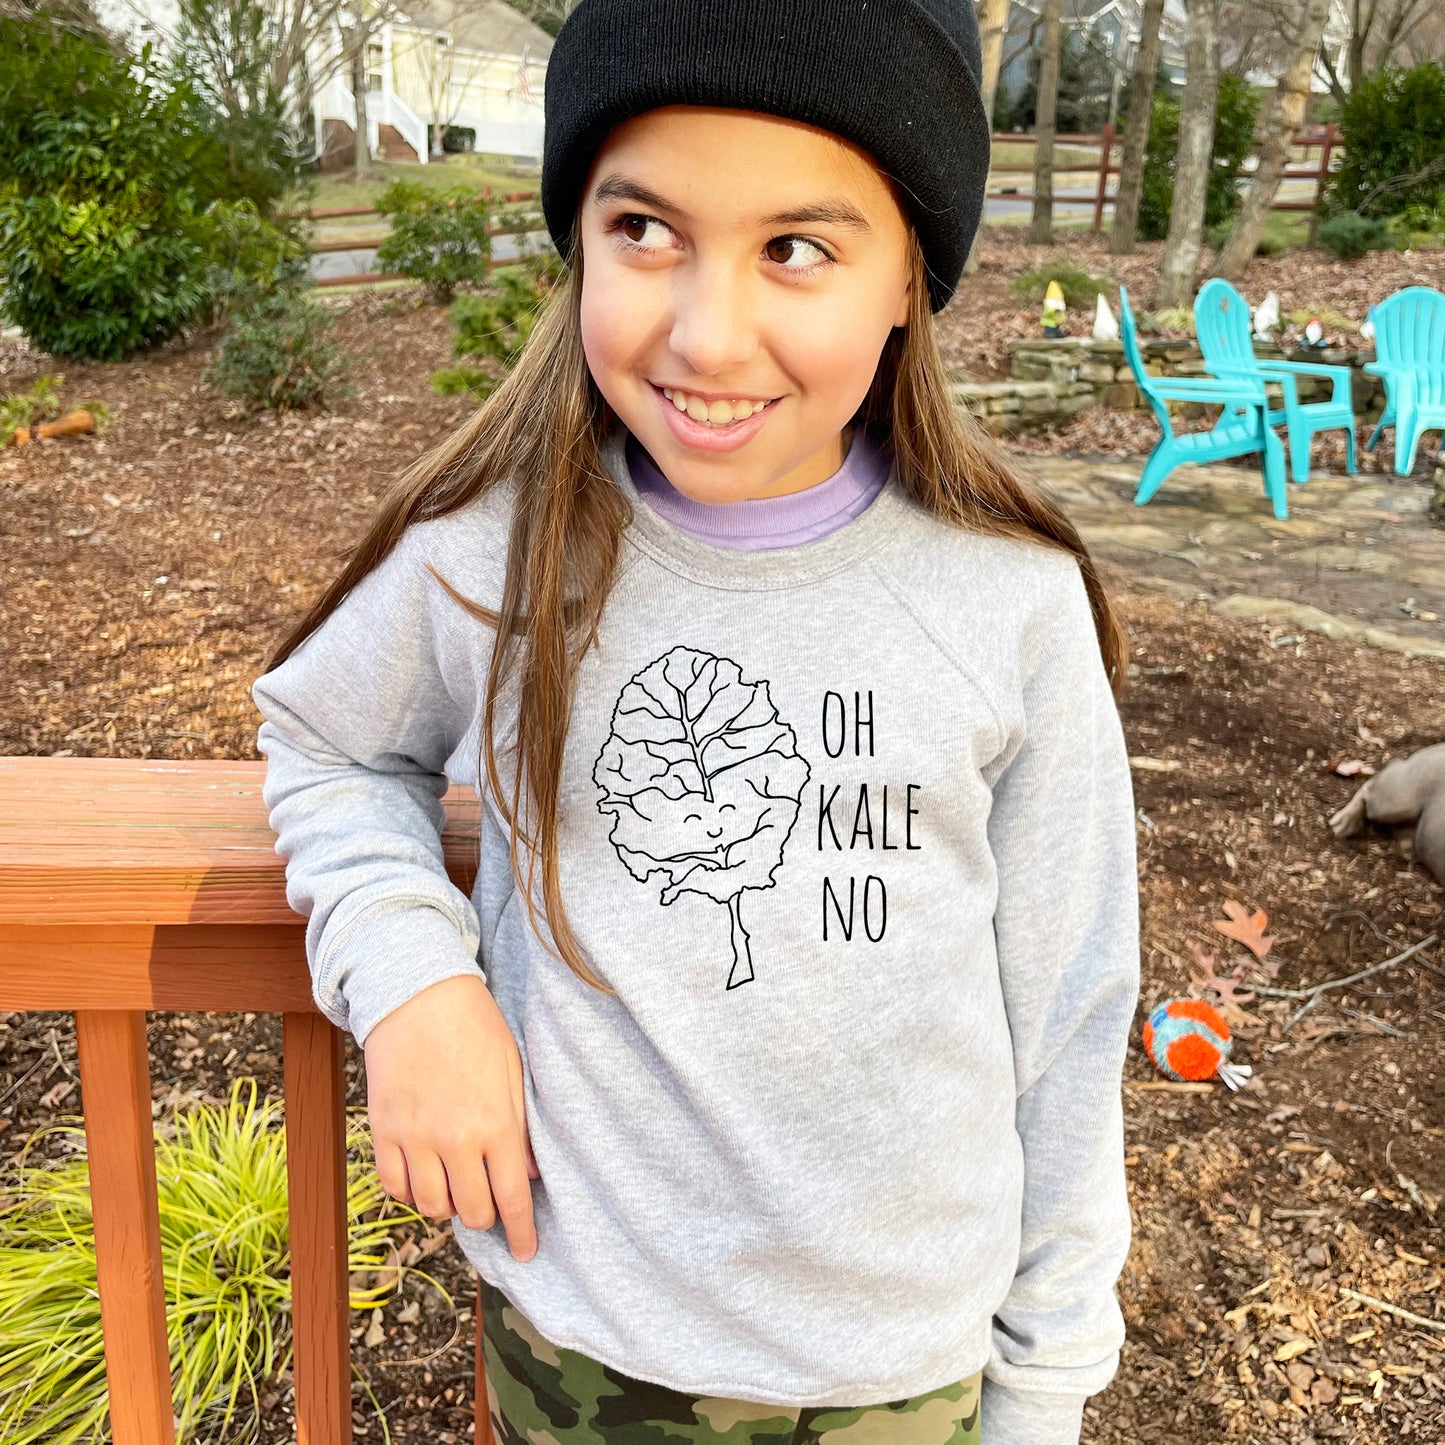 Oh Kale No - Kid's Sweatshirt - Heather Gray or Mauve